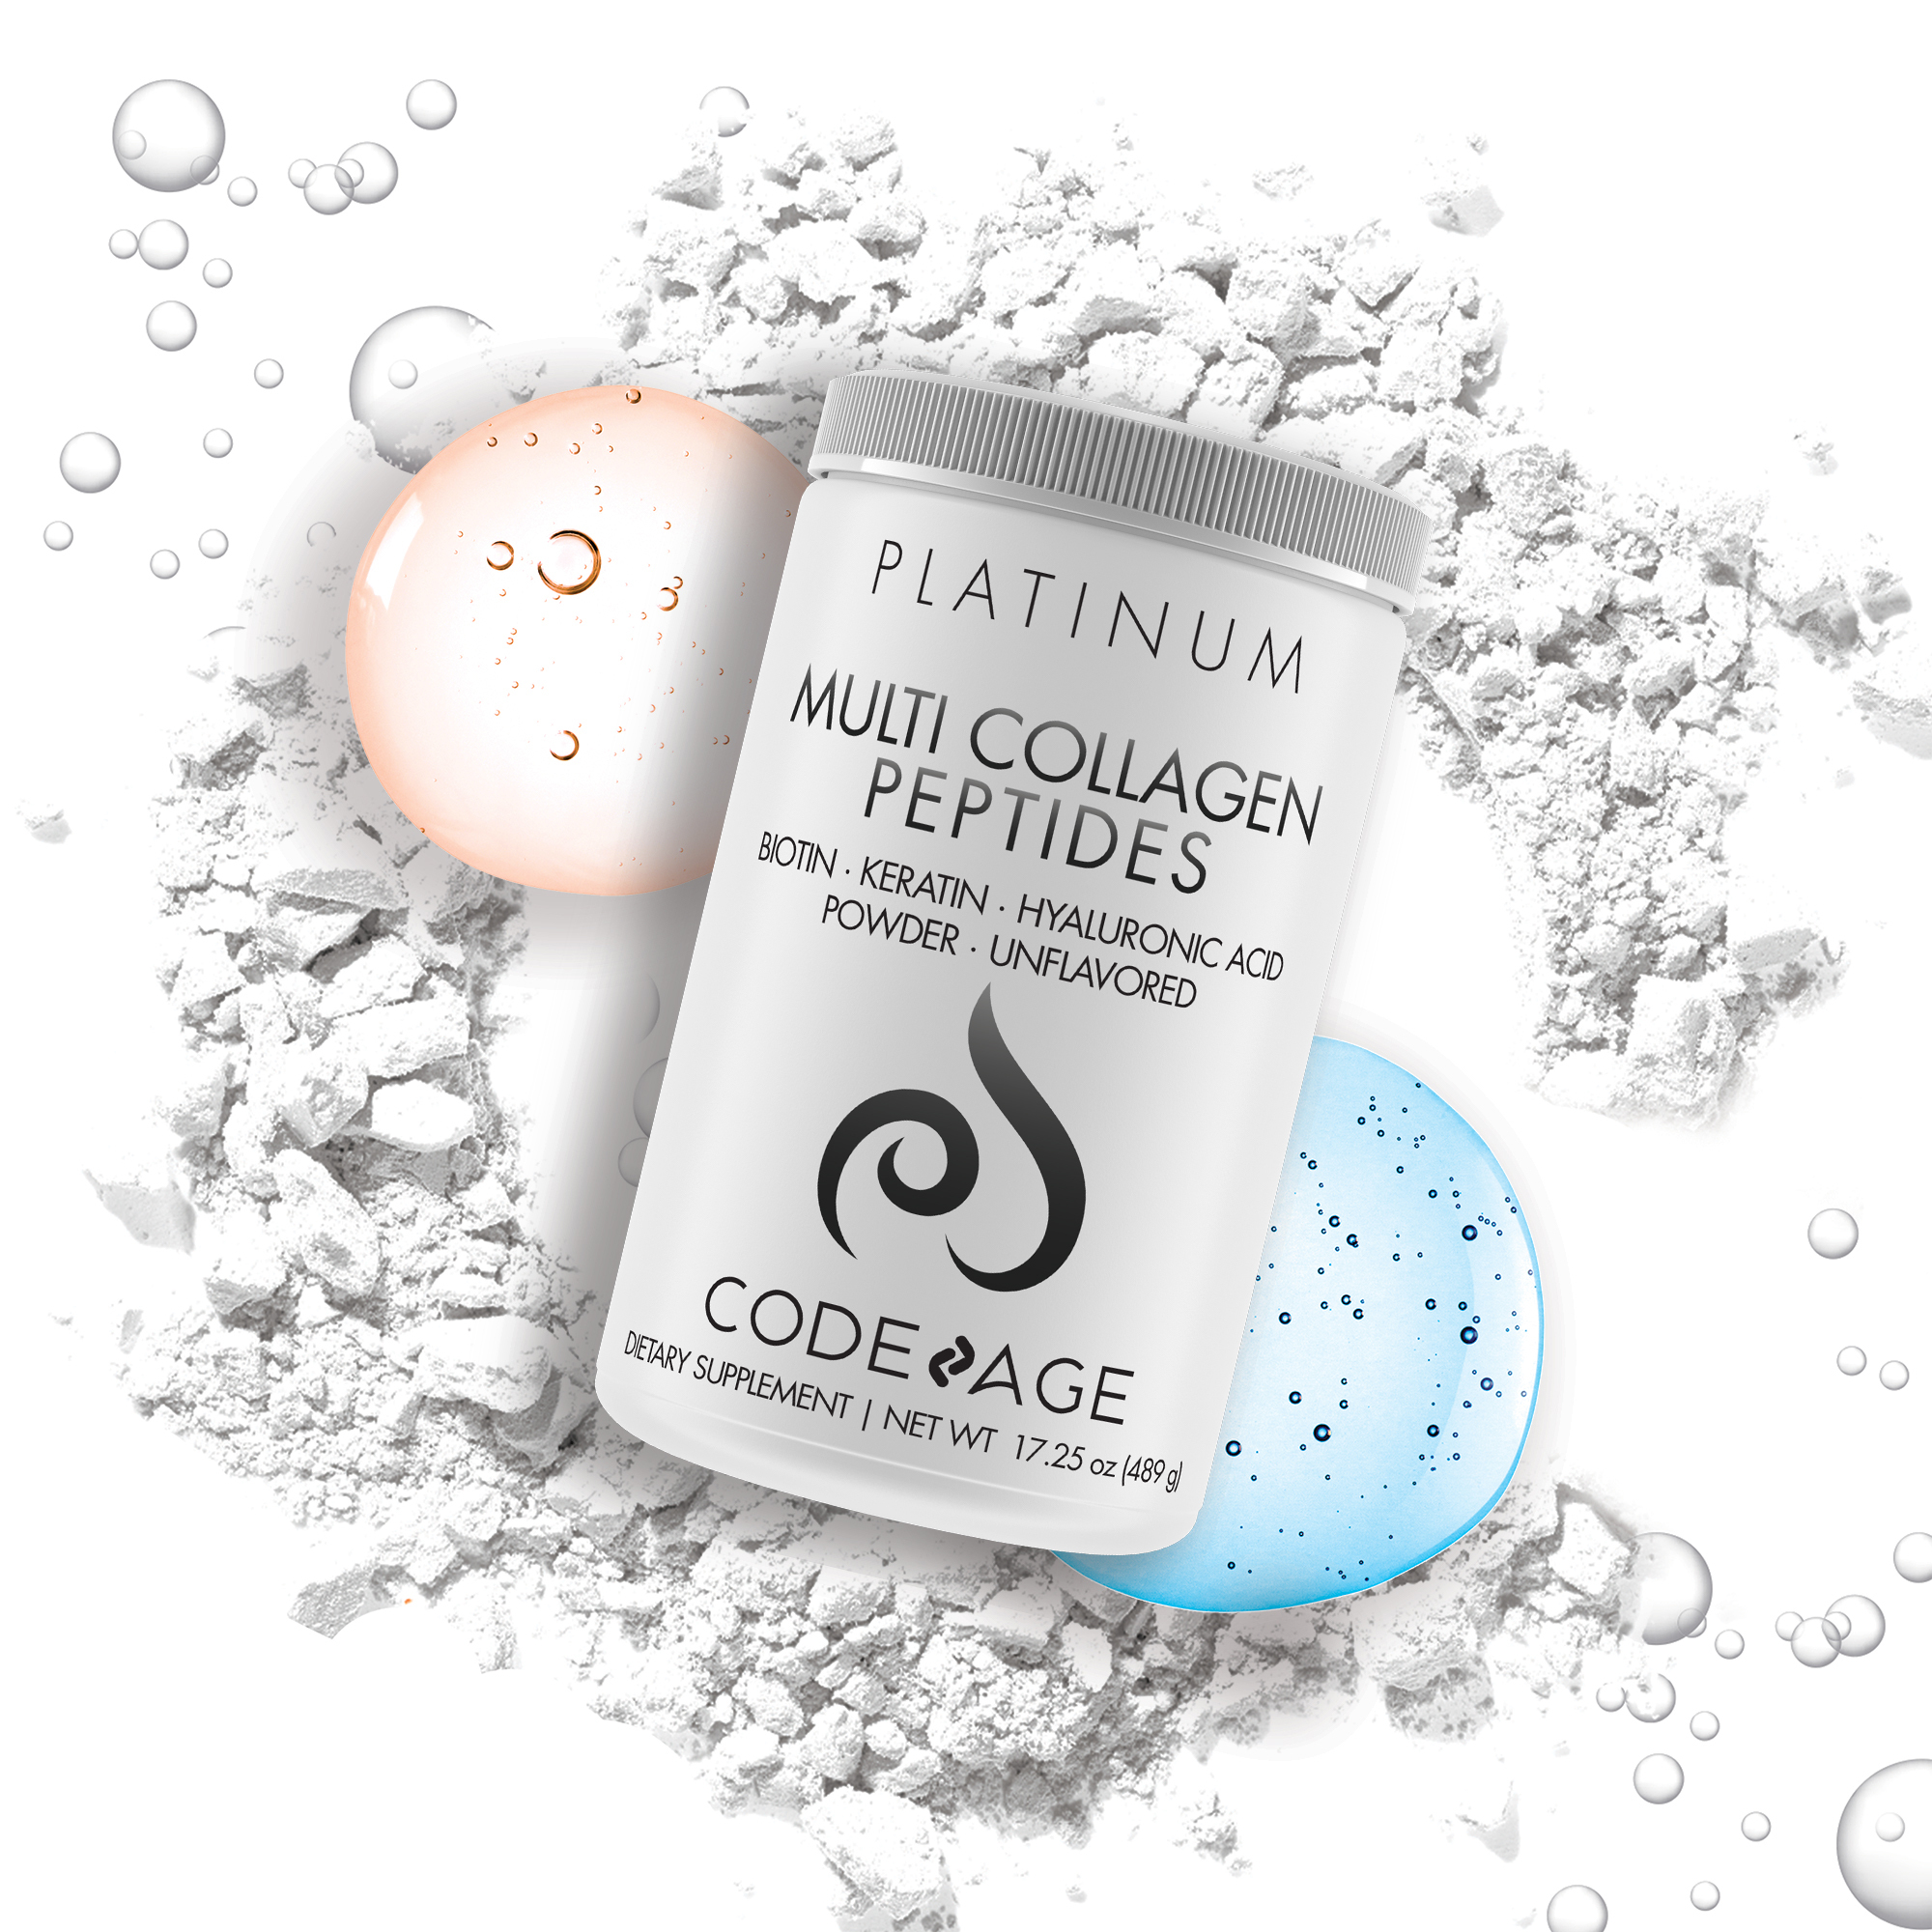 CODEAGE Platinum Multi Collagen Peptides Powder